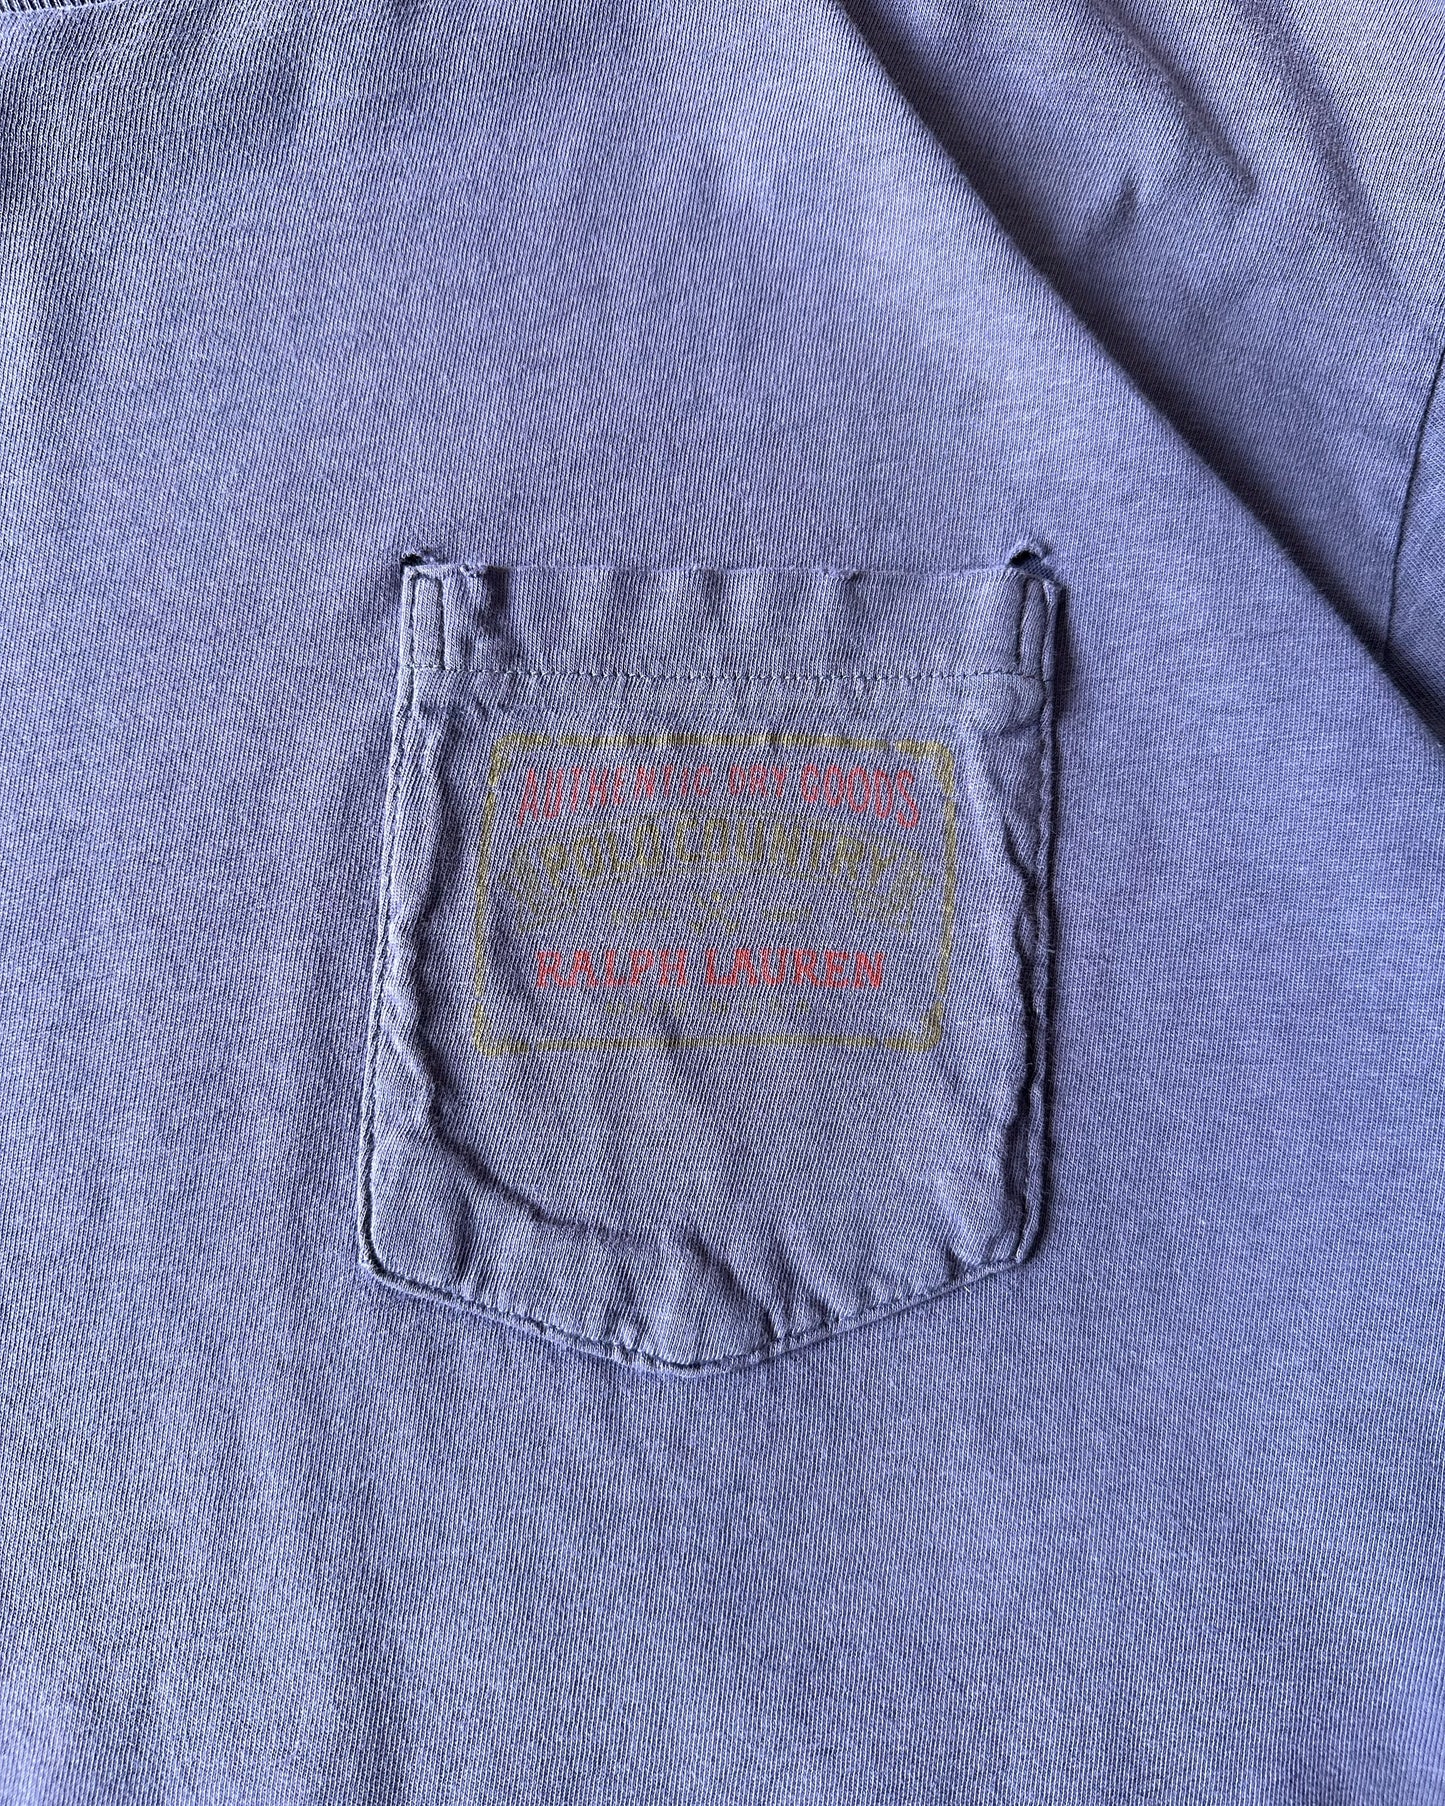 1990s - Distressed Blue Ralph Lauren Pocket T-Shirt - L/XL